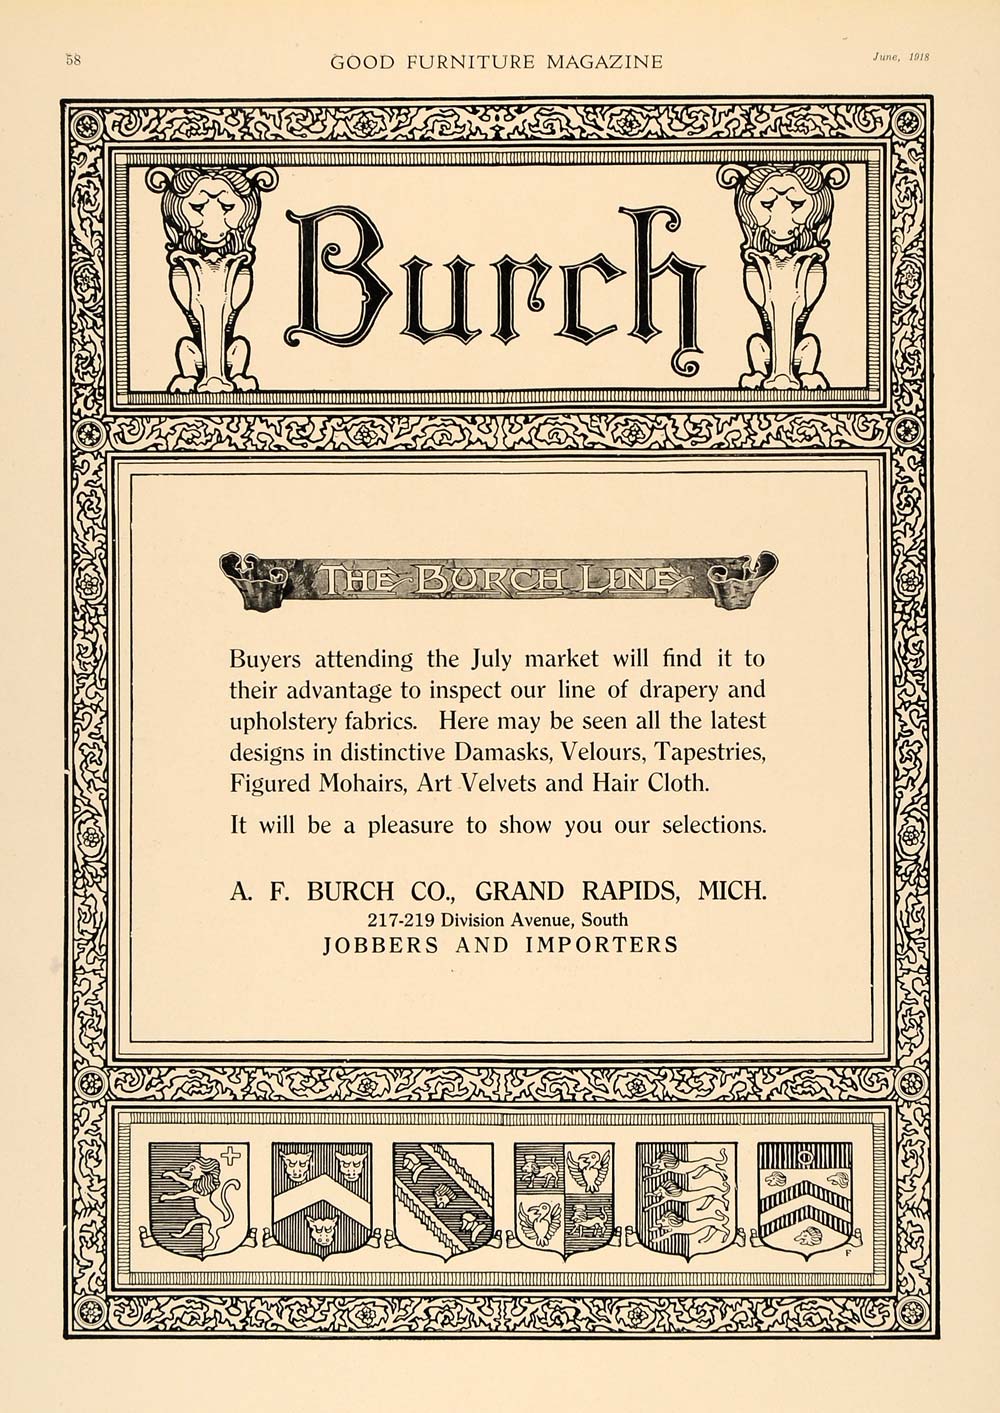 1918 Ad A F Burch Company Upholstery Drapery Fabrics - ORIGINAL ADVERTISING GF1